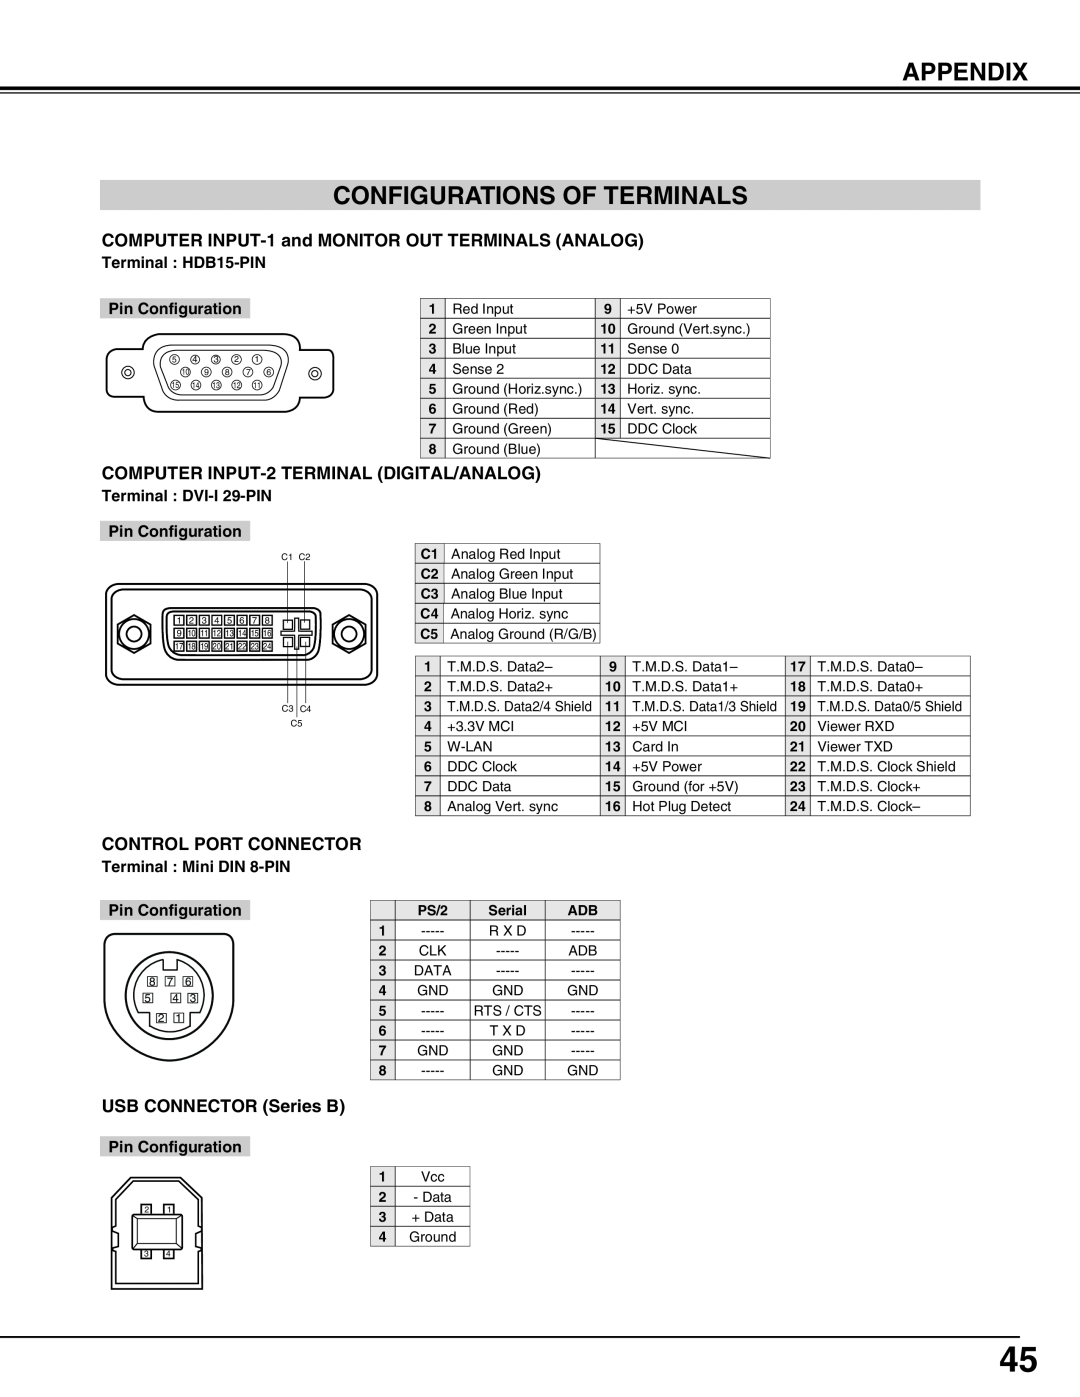 Christie Digital Systems 38-VIV207-01 Appendix Configurations Of Terminals, COMPUTER INPUT-2 TERMINAL DIGITAL/ANALOG 